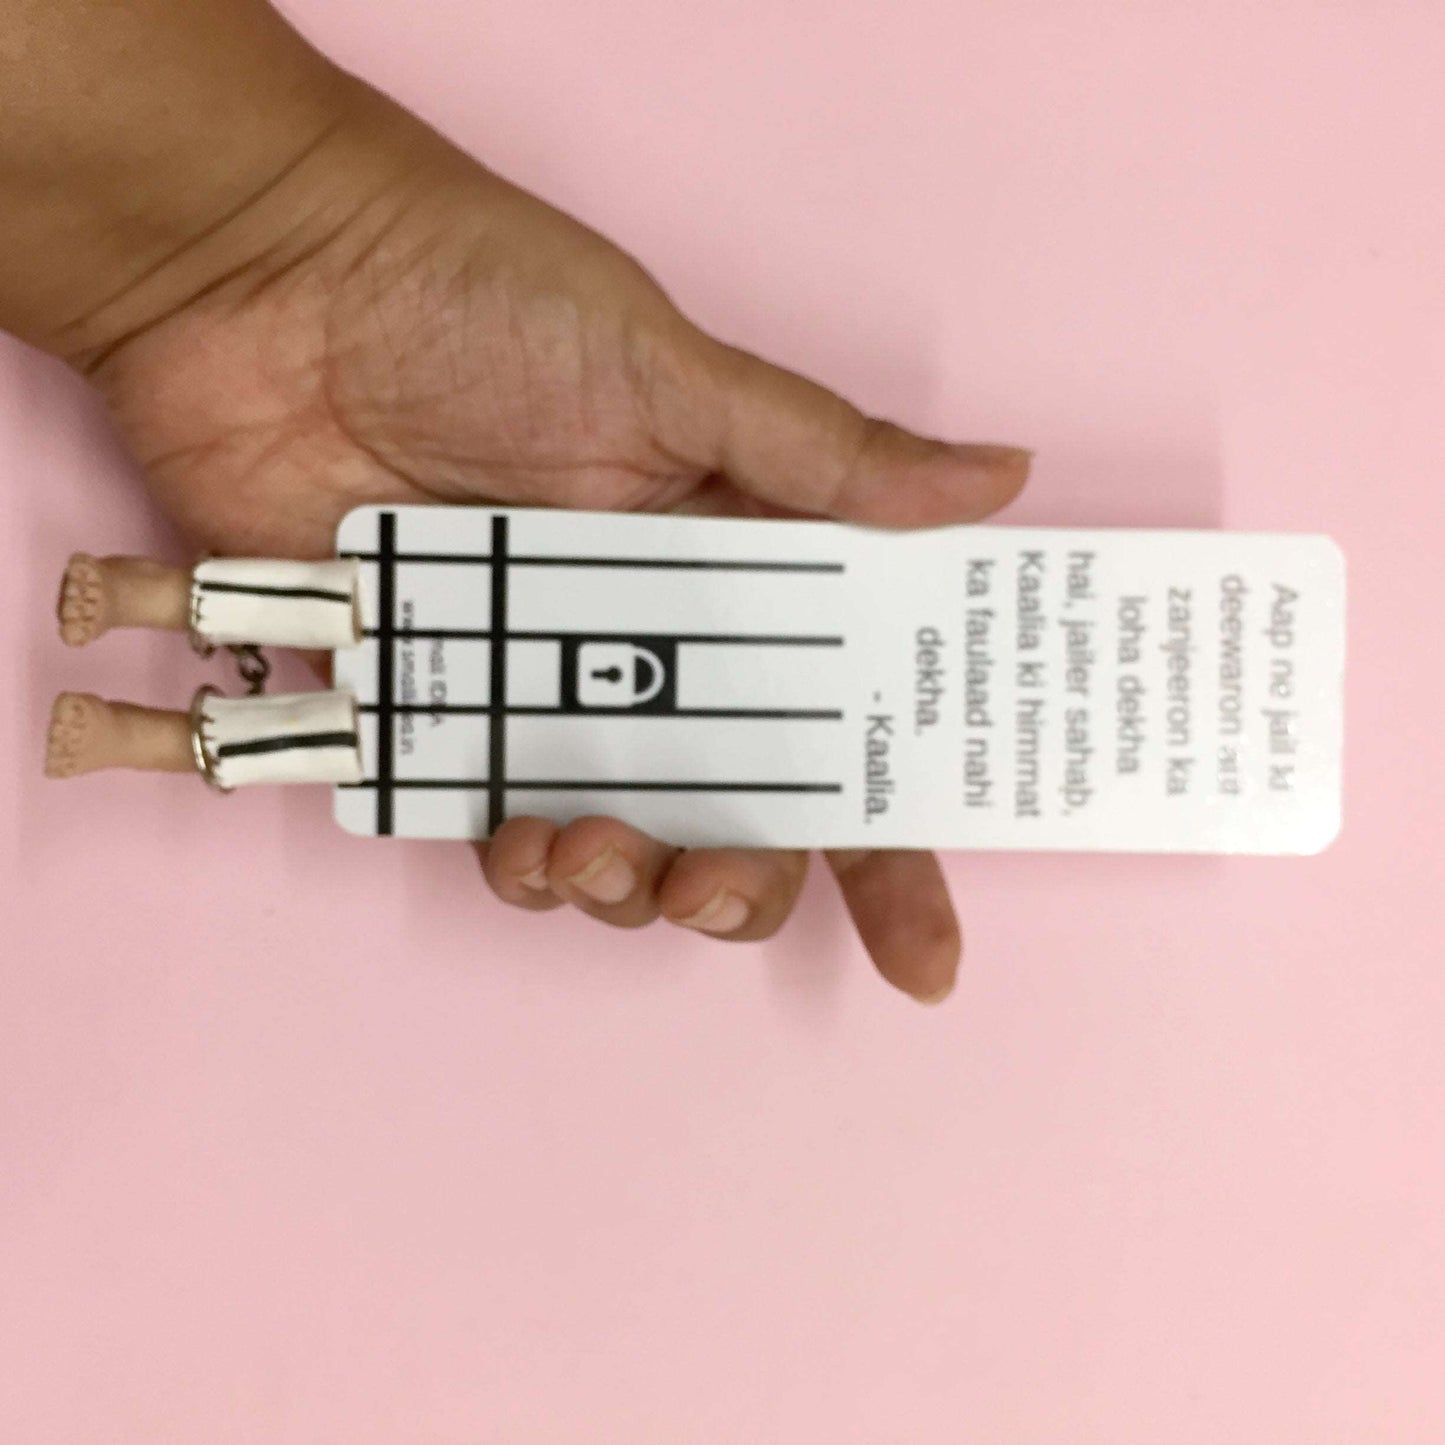 Kalia Movie Jailbreak Dailouge Handmade Miniature Leggy Bookmark